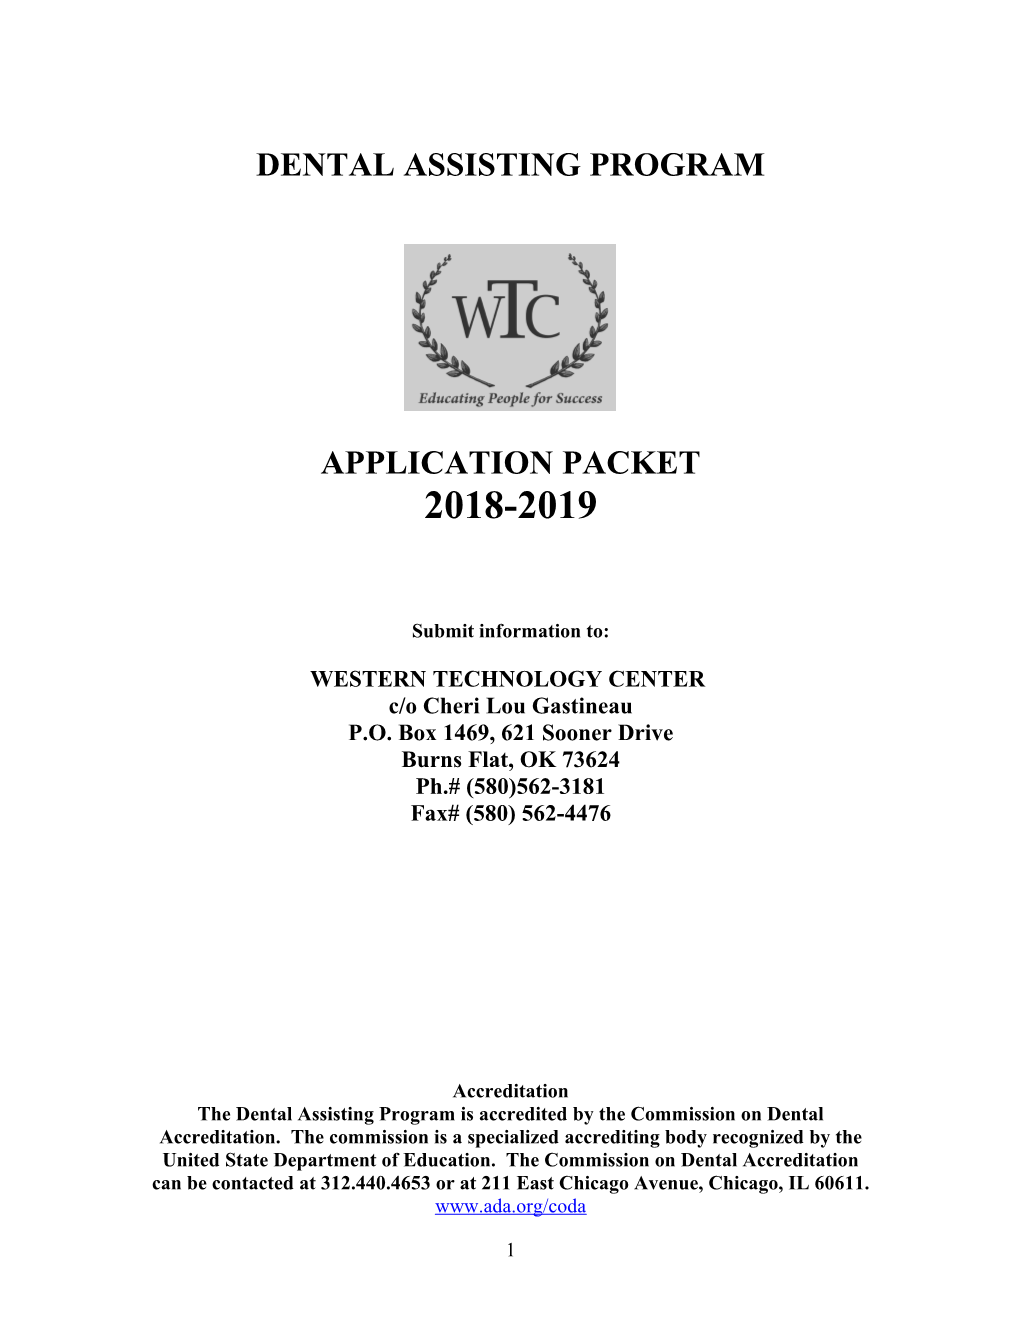 Dental Assisting Program